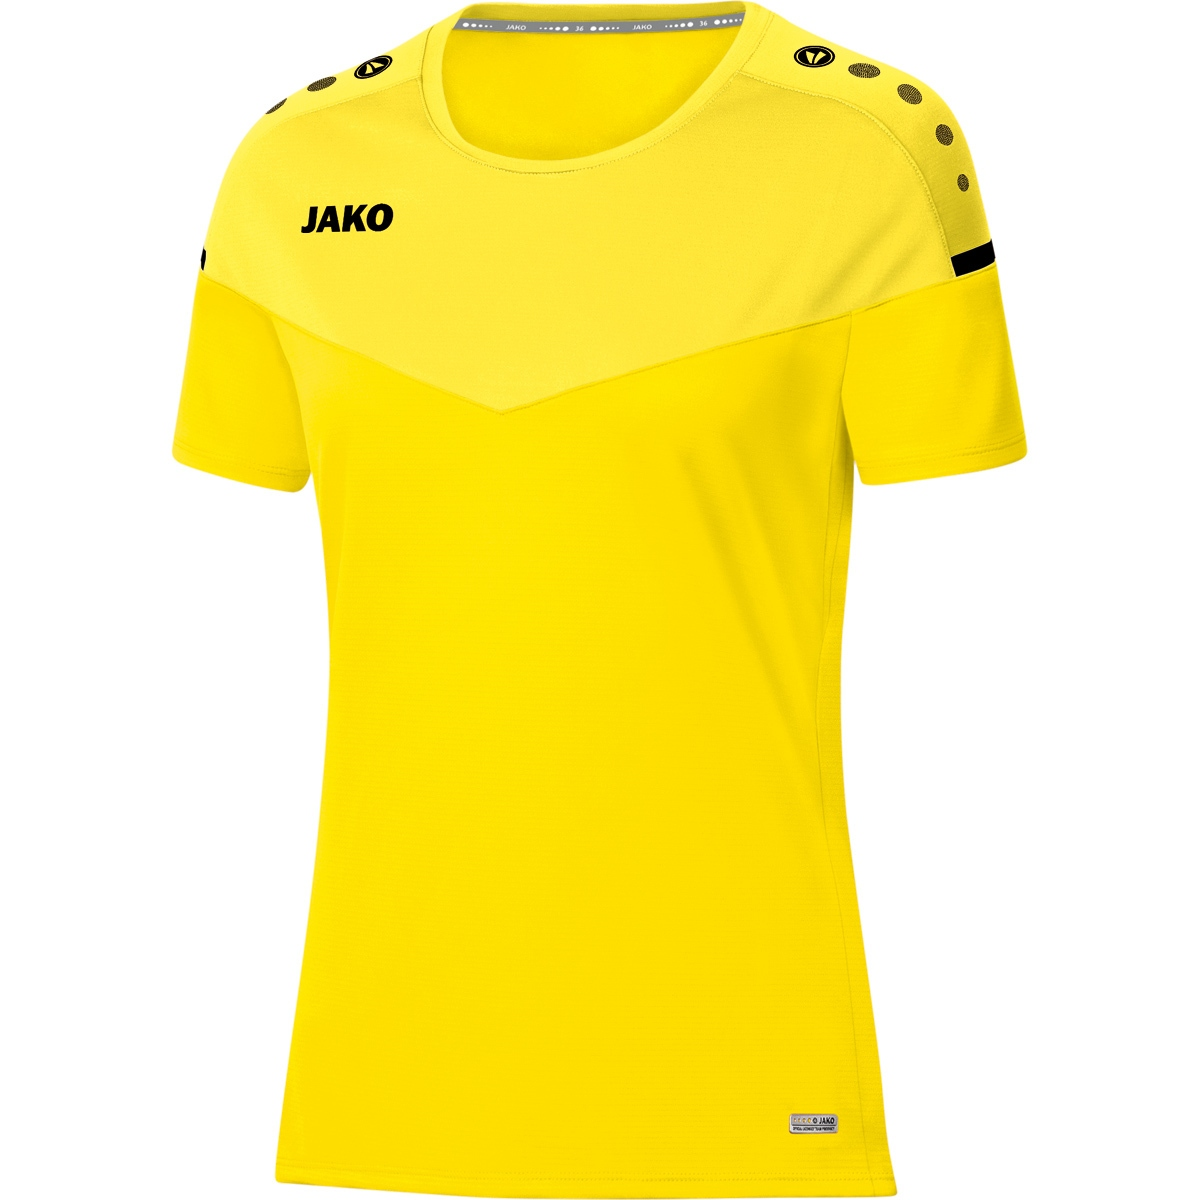 2.0 T-Shirt JAKO light, Champ 6120 citro/citro Gr. 34, Damen,